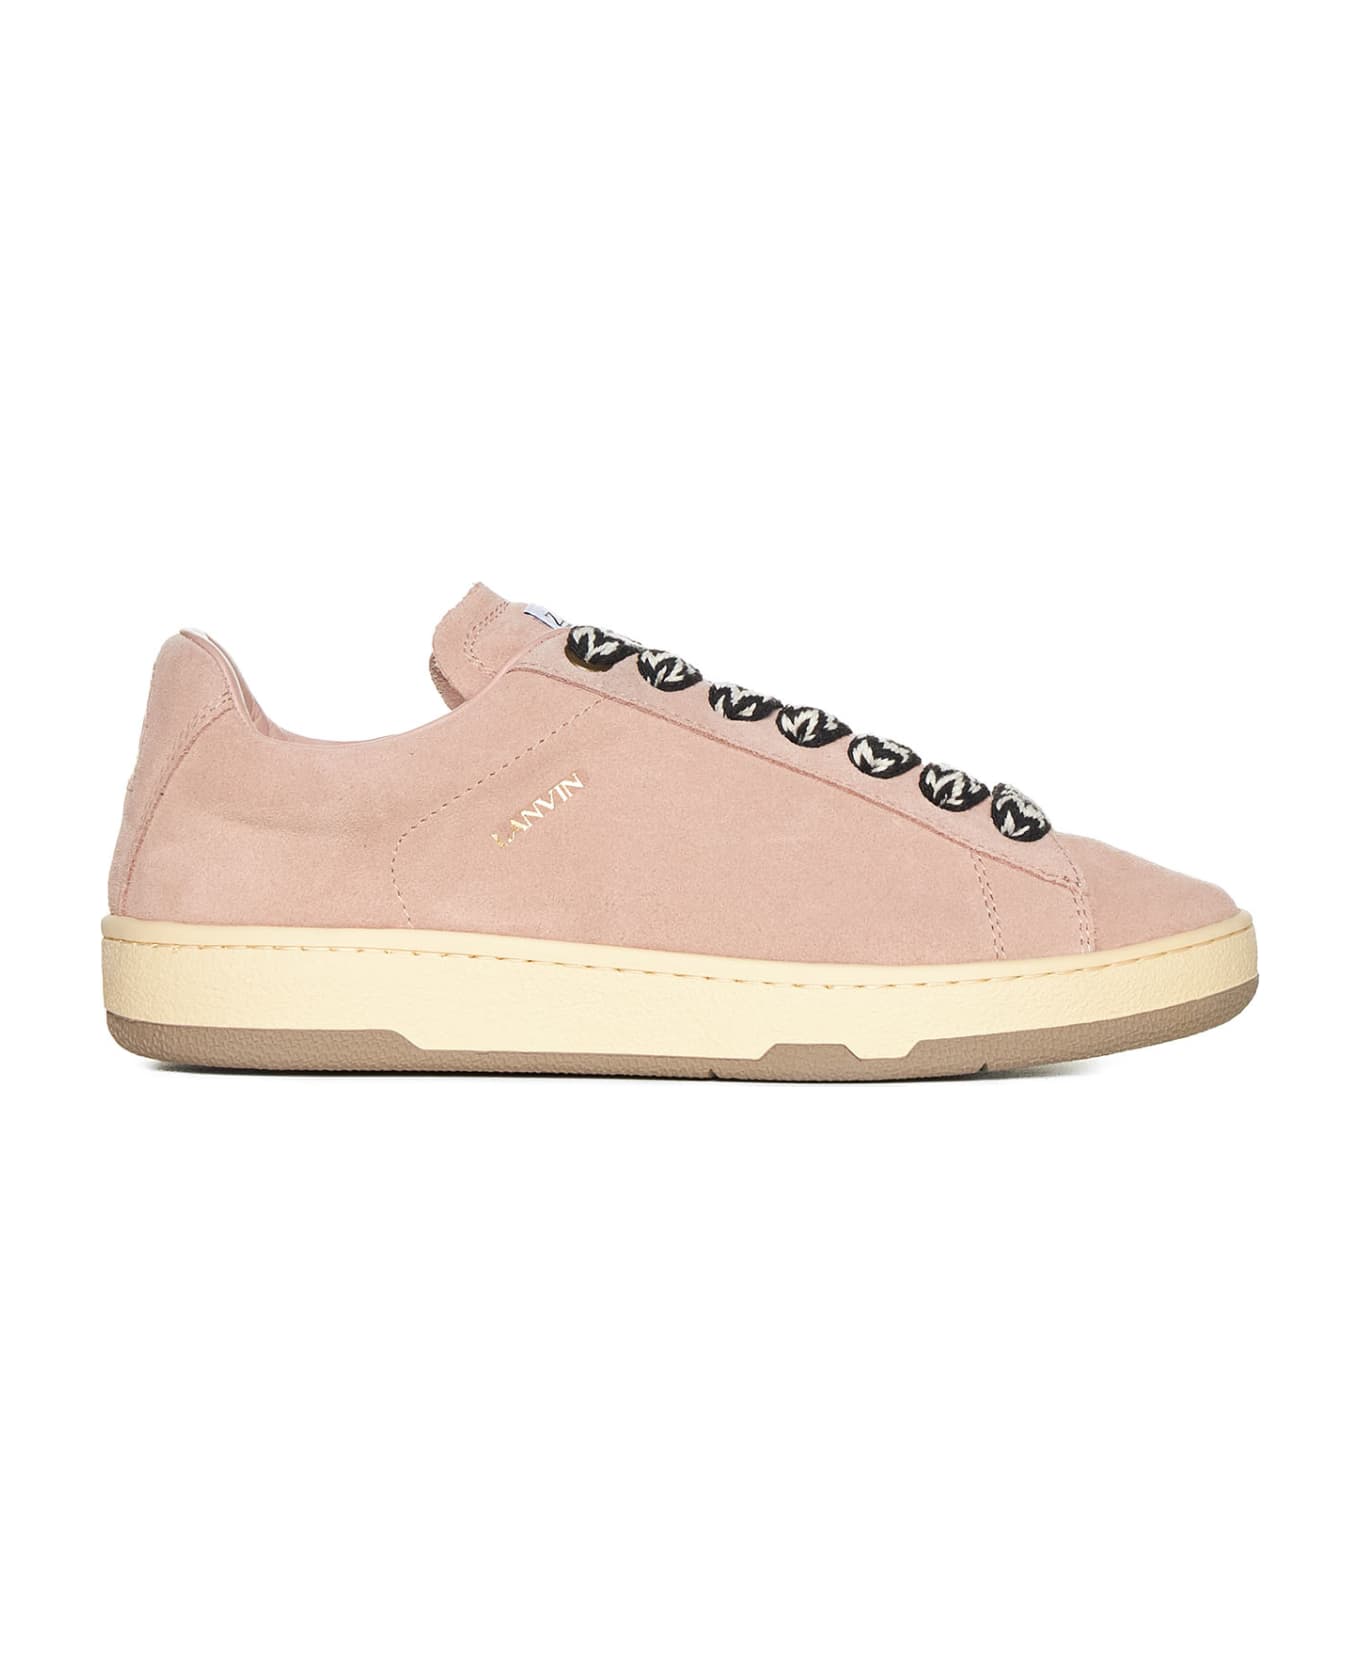 Lanvin Sneakers - Pale Pink